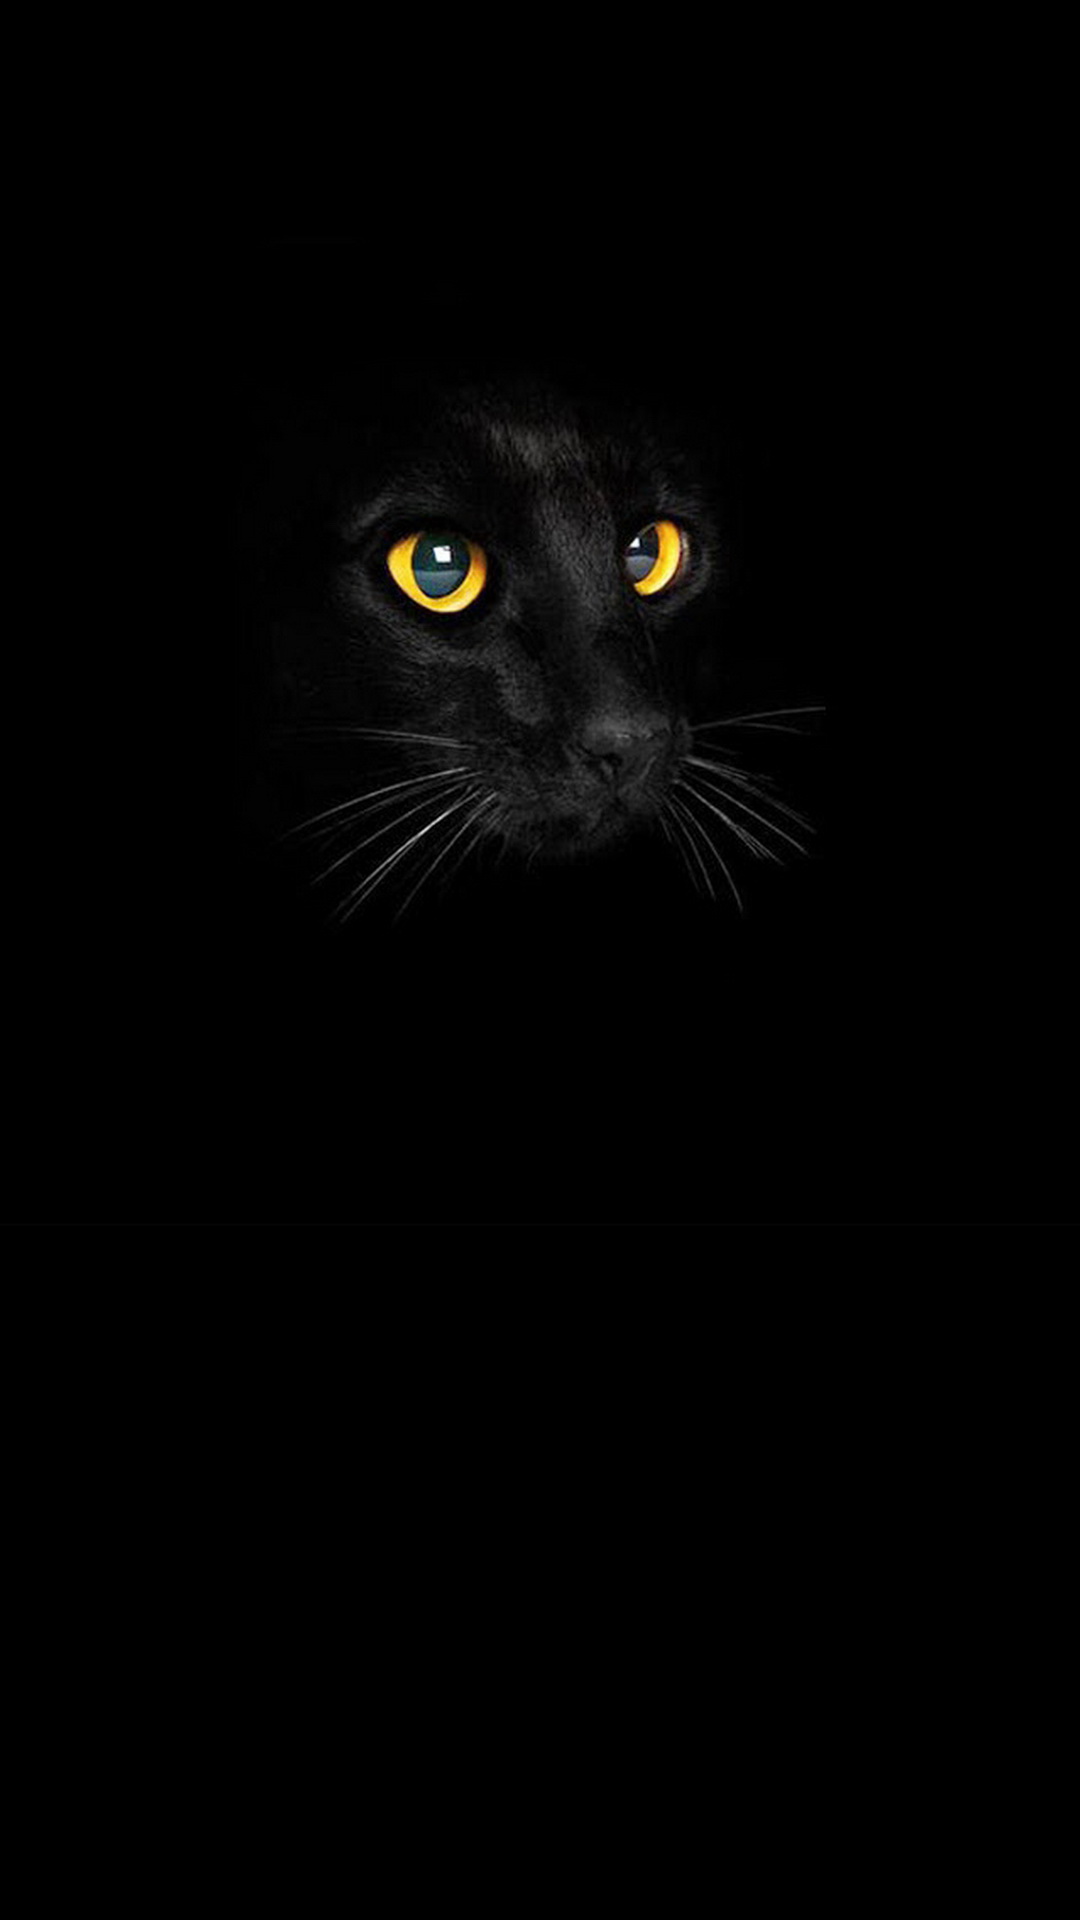 Free download 640x960 Black Cat in the Dark Iphone 4 wallpaper 640x960  for your Desktop Mobile  Tablet  Explore 50 Black Cat iPhone Wallpaper   Wallpaper Black Cat Black Cat Background Black Cat Wallpaper